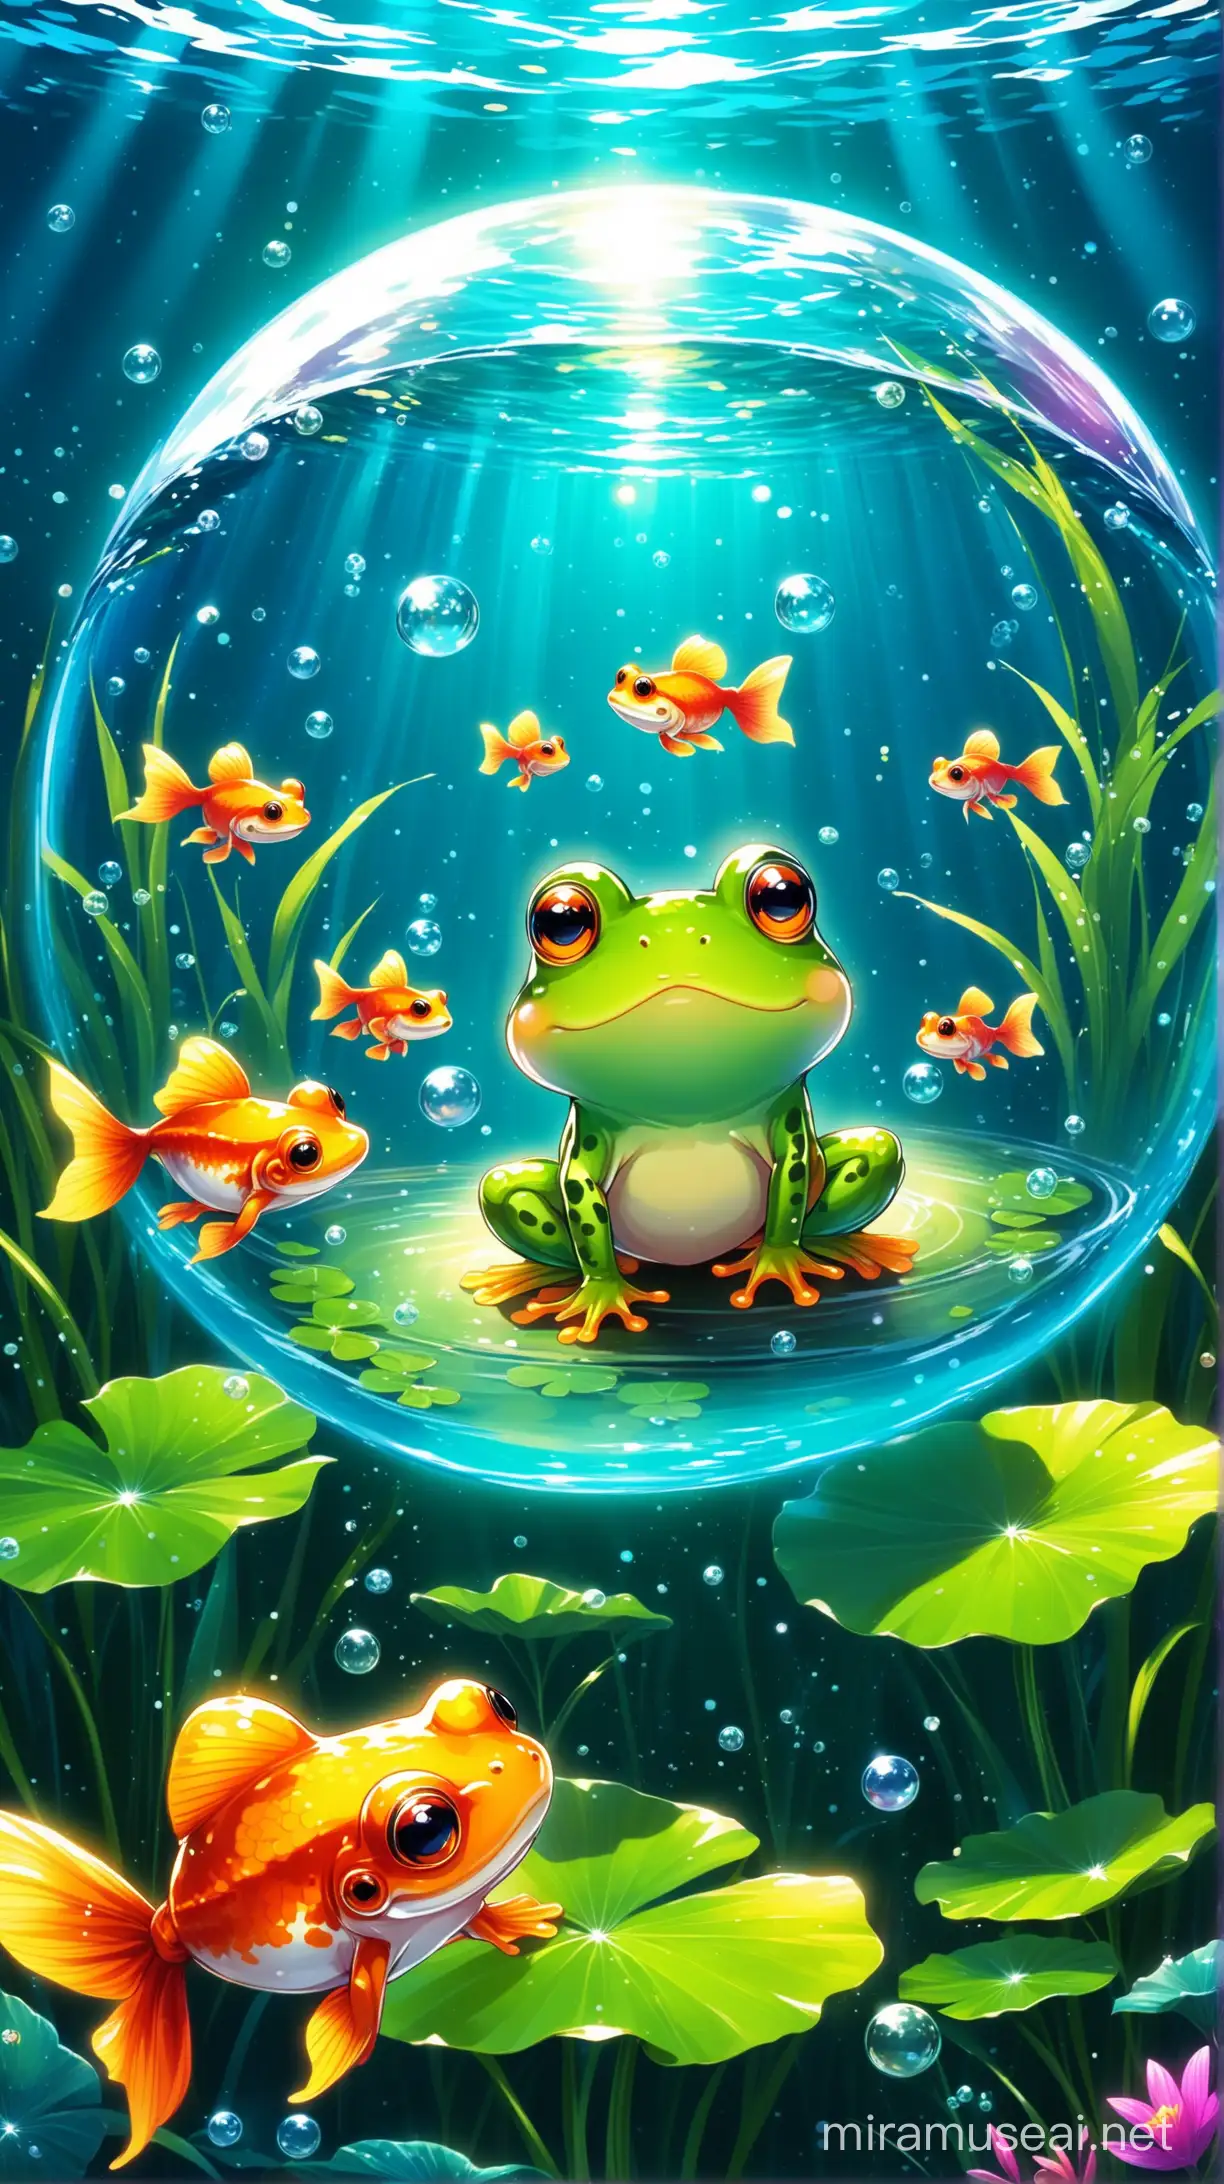 Pond underwater ball little frog little goldfish singing high definition detailed lively joyful atmosphere vivid colors natural style,4k,cartoon